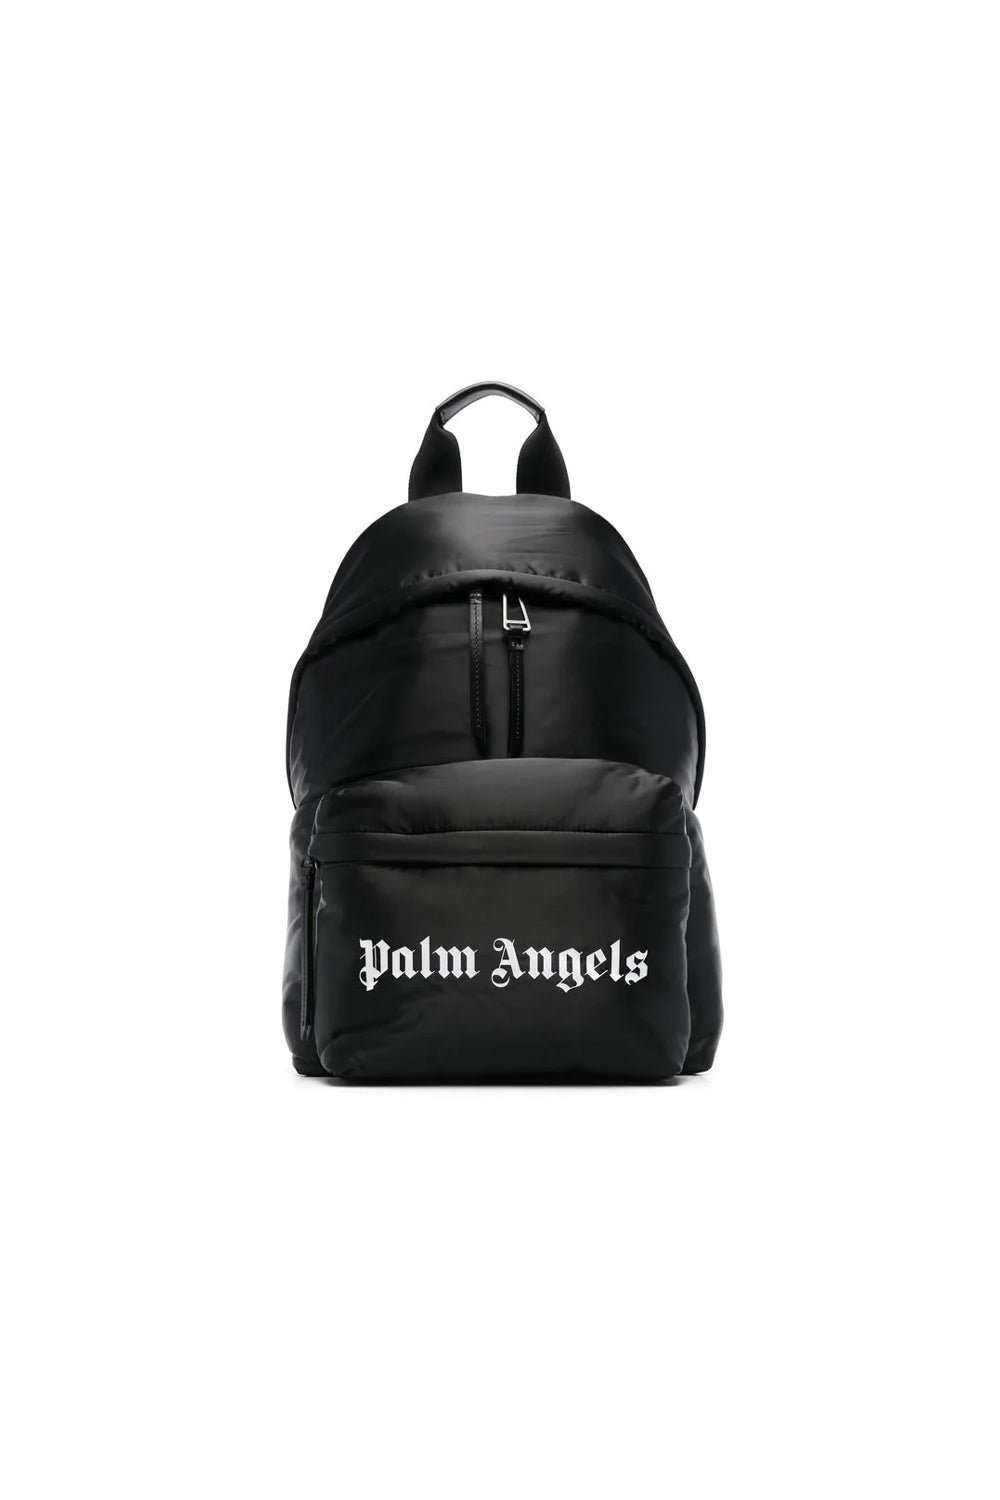 Palm Angels logo-print backpack